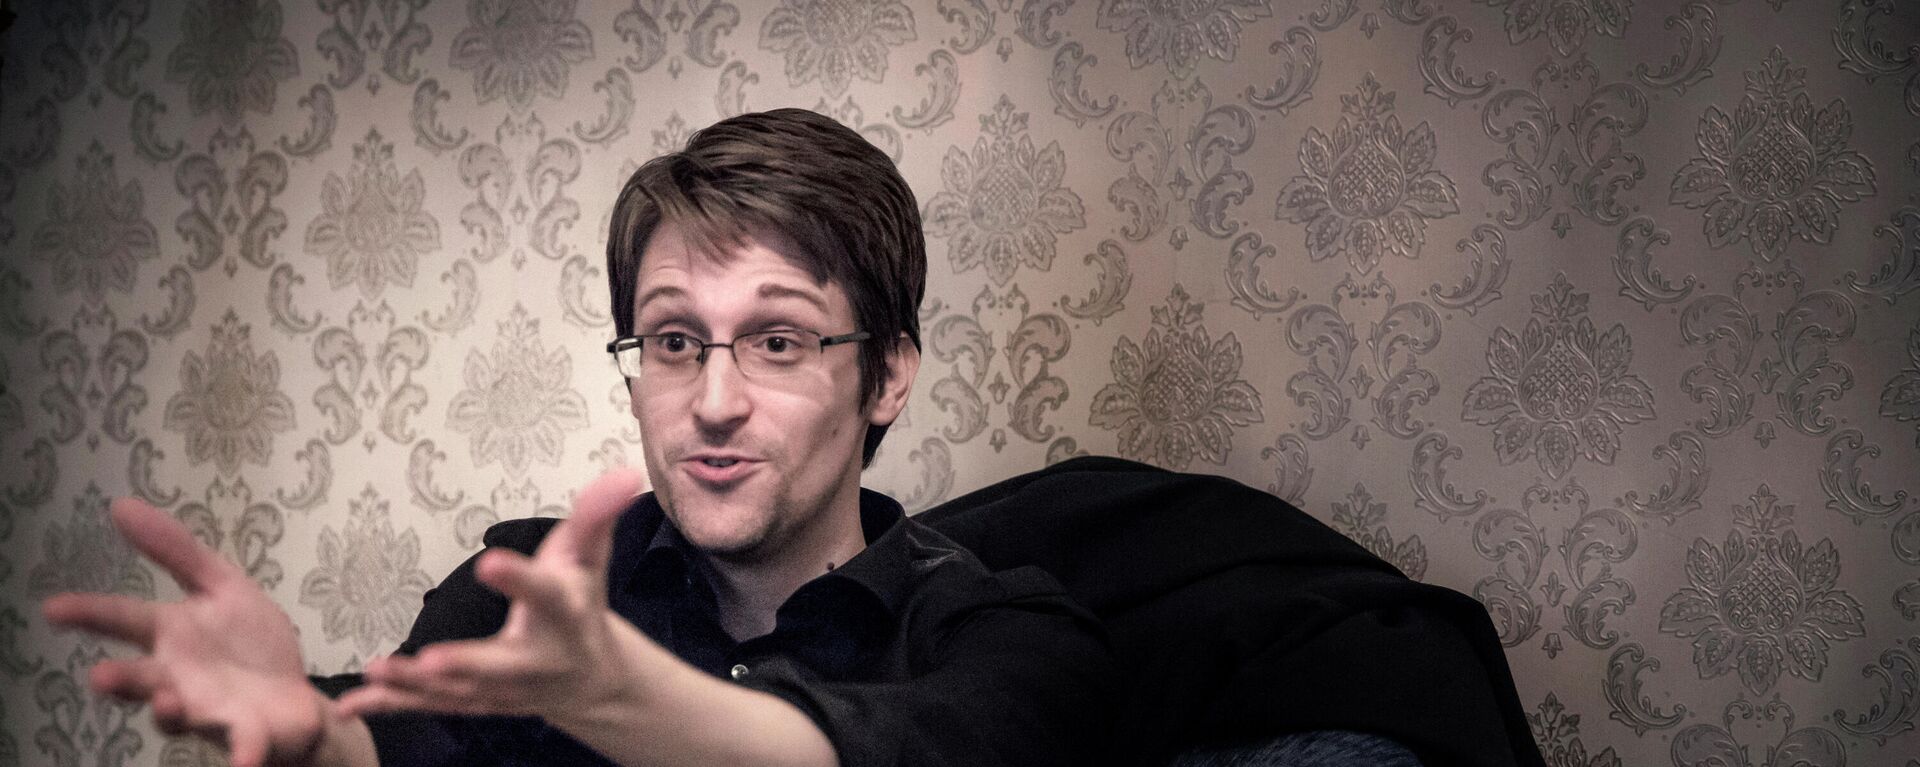  Edward Snowden, exagente de inteligencia estadounidense - Sputnik Mundo, 1920, 03.09.2021